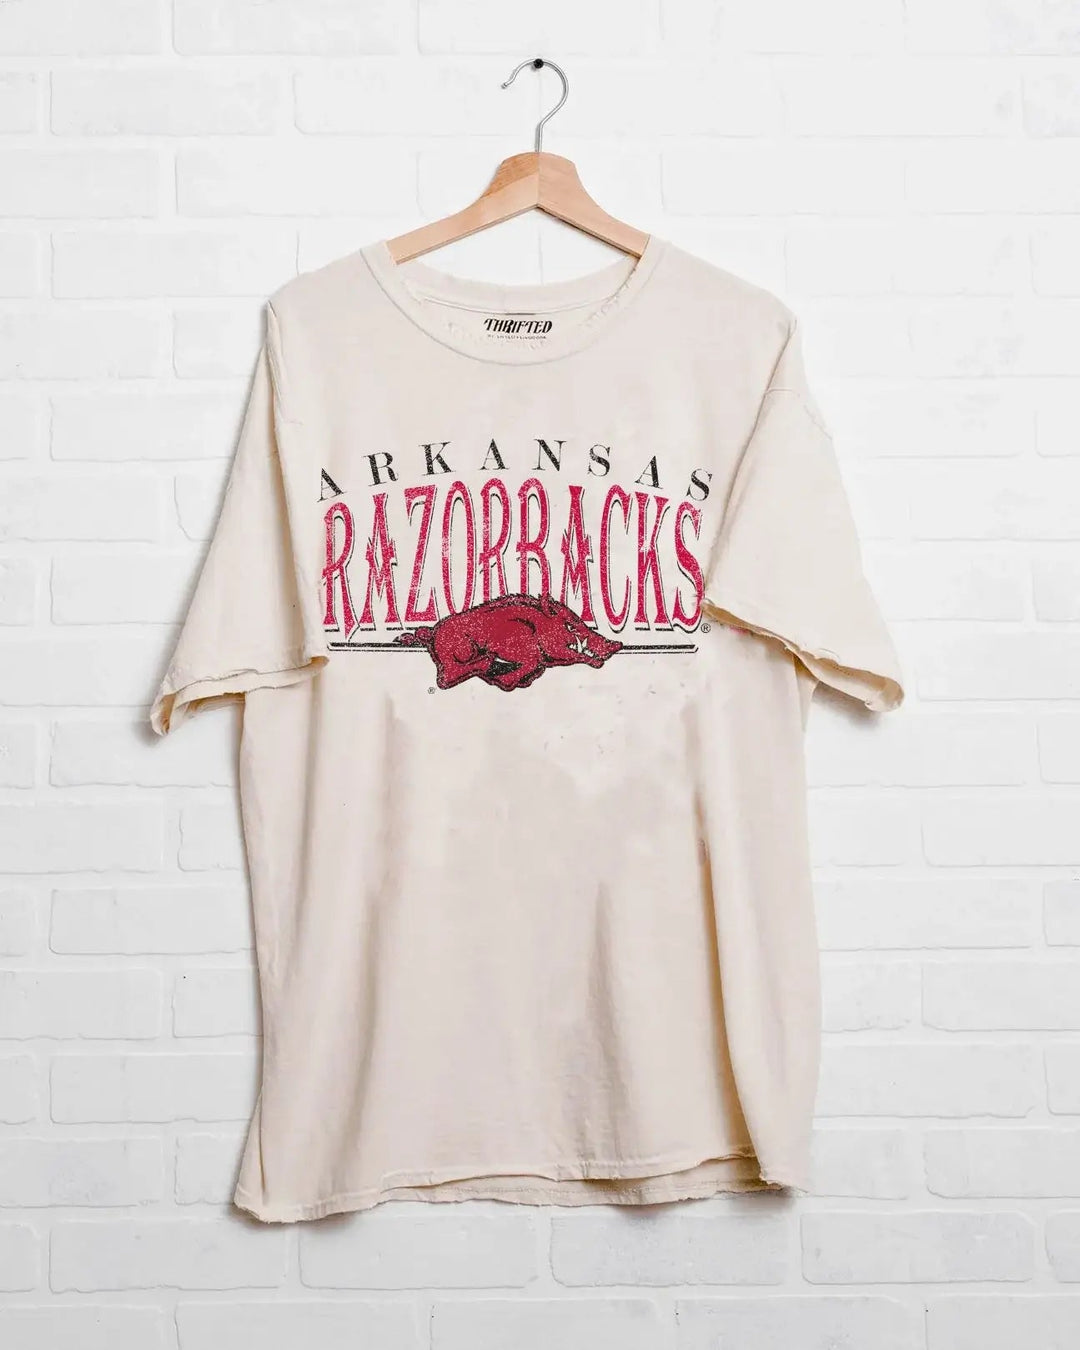 Arkansas Razorbacks 80s Thrifted Tee - Graphic Tee